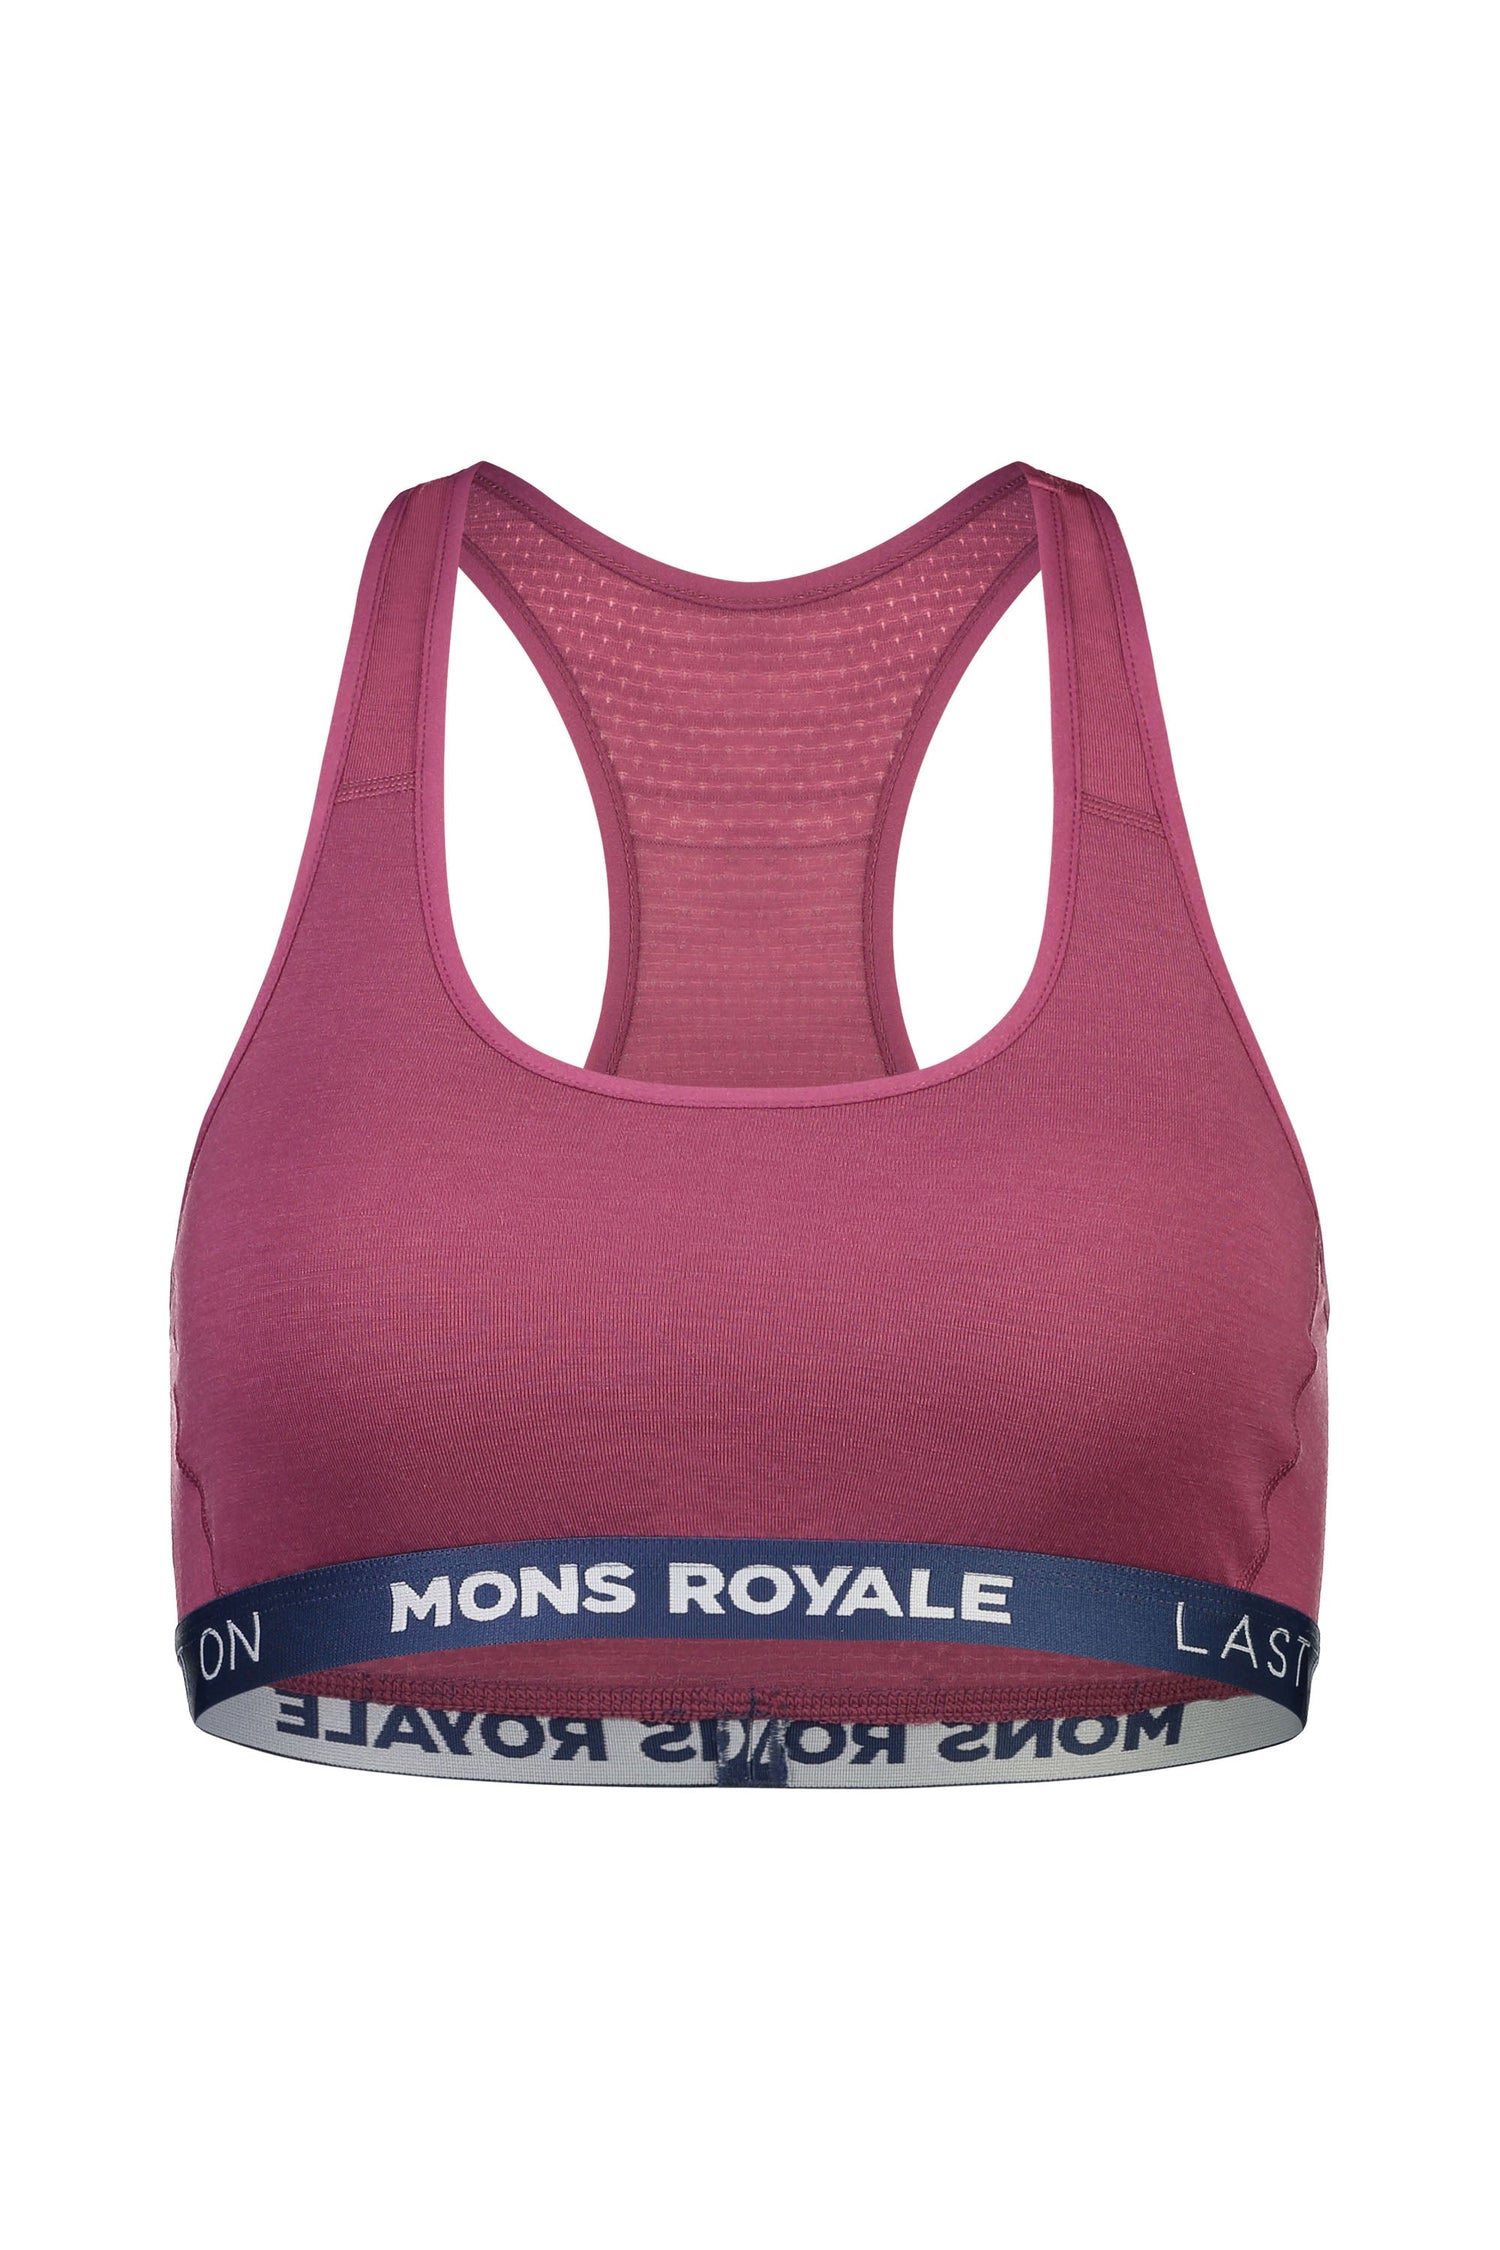 Mons Royale - Sierra Sports Bra - Merino wool - Weekendbee - sustainable sportswear